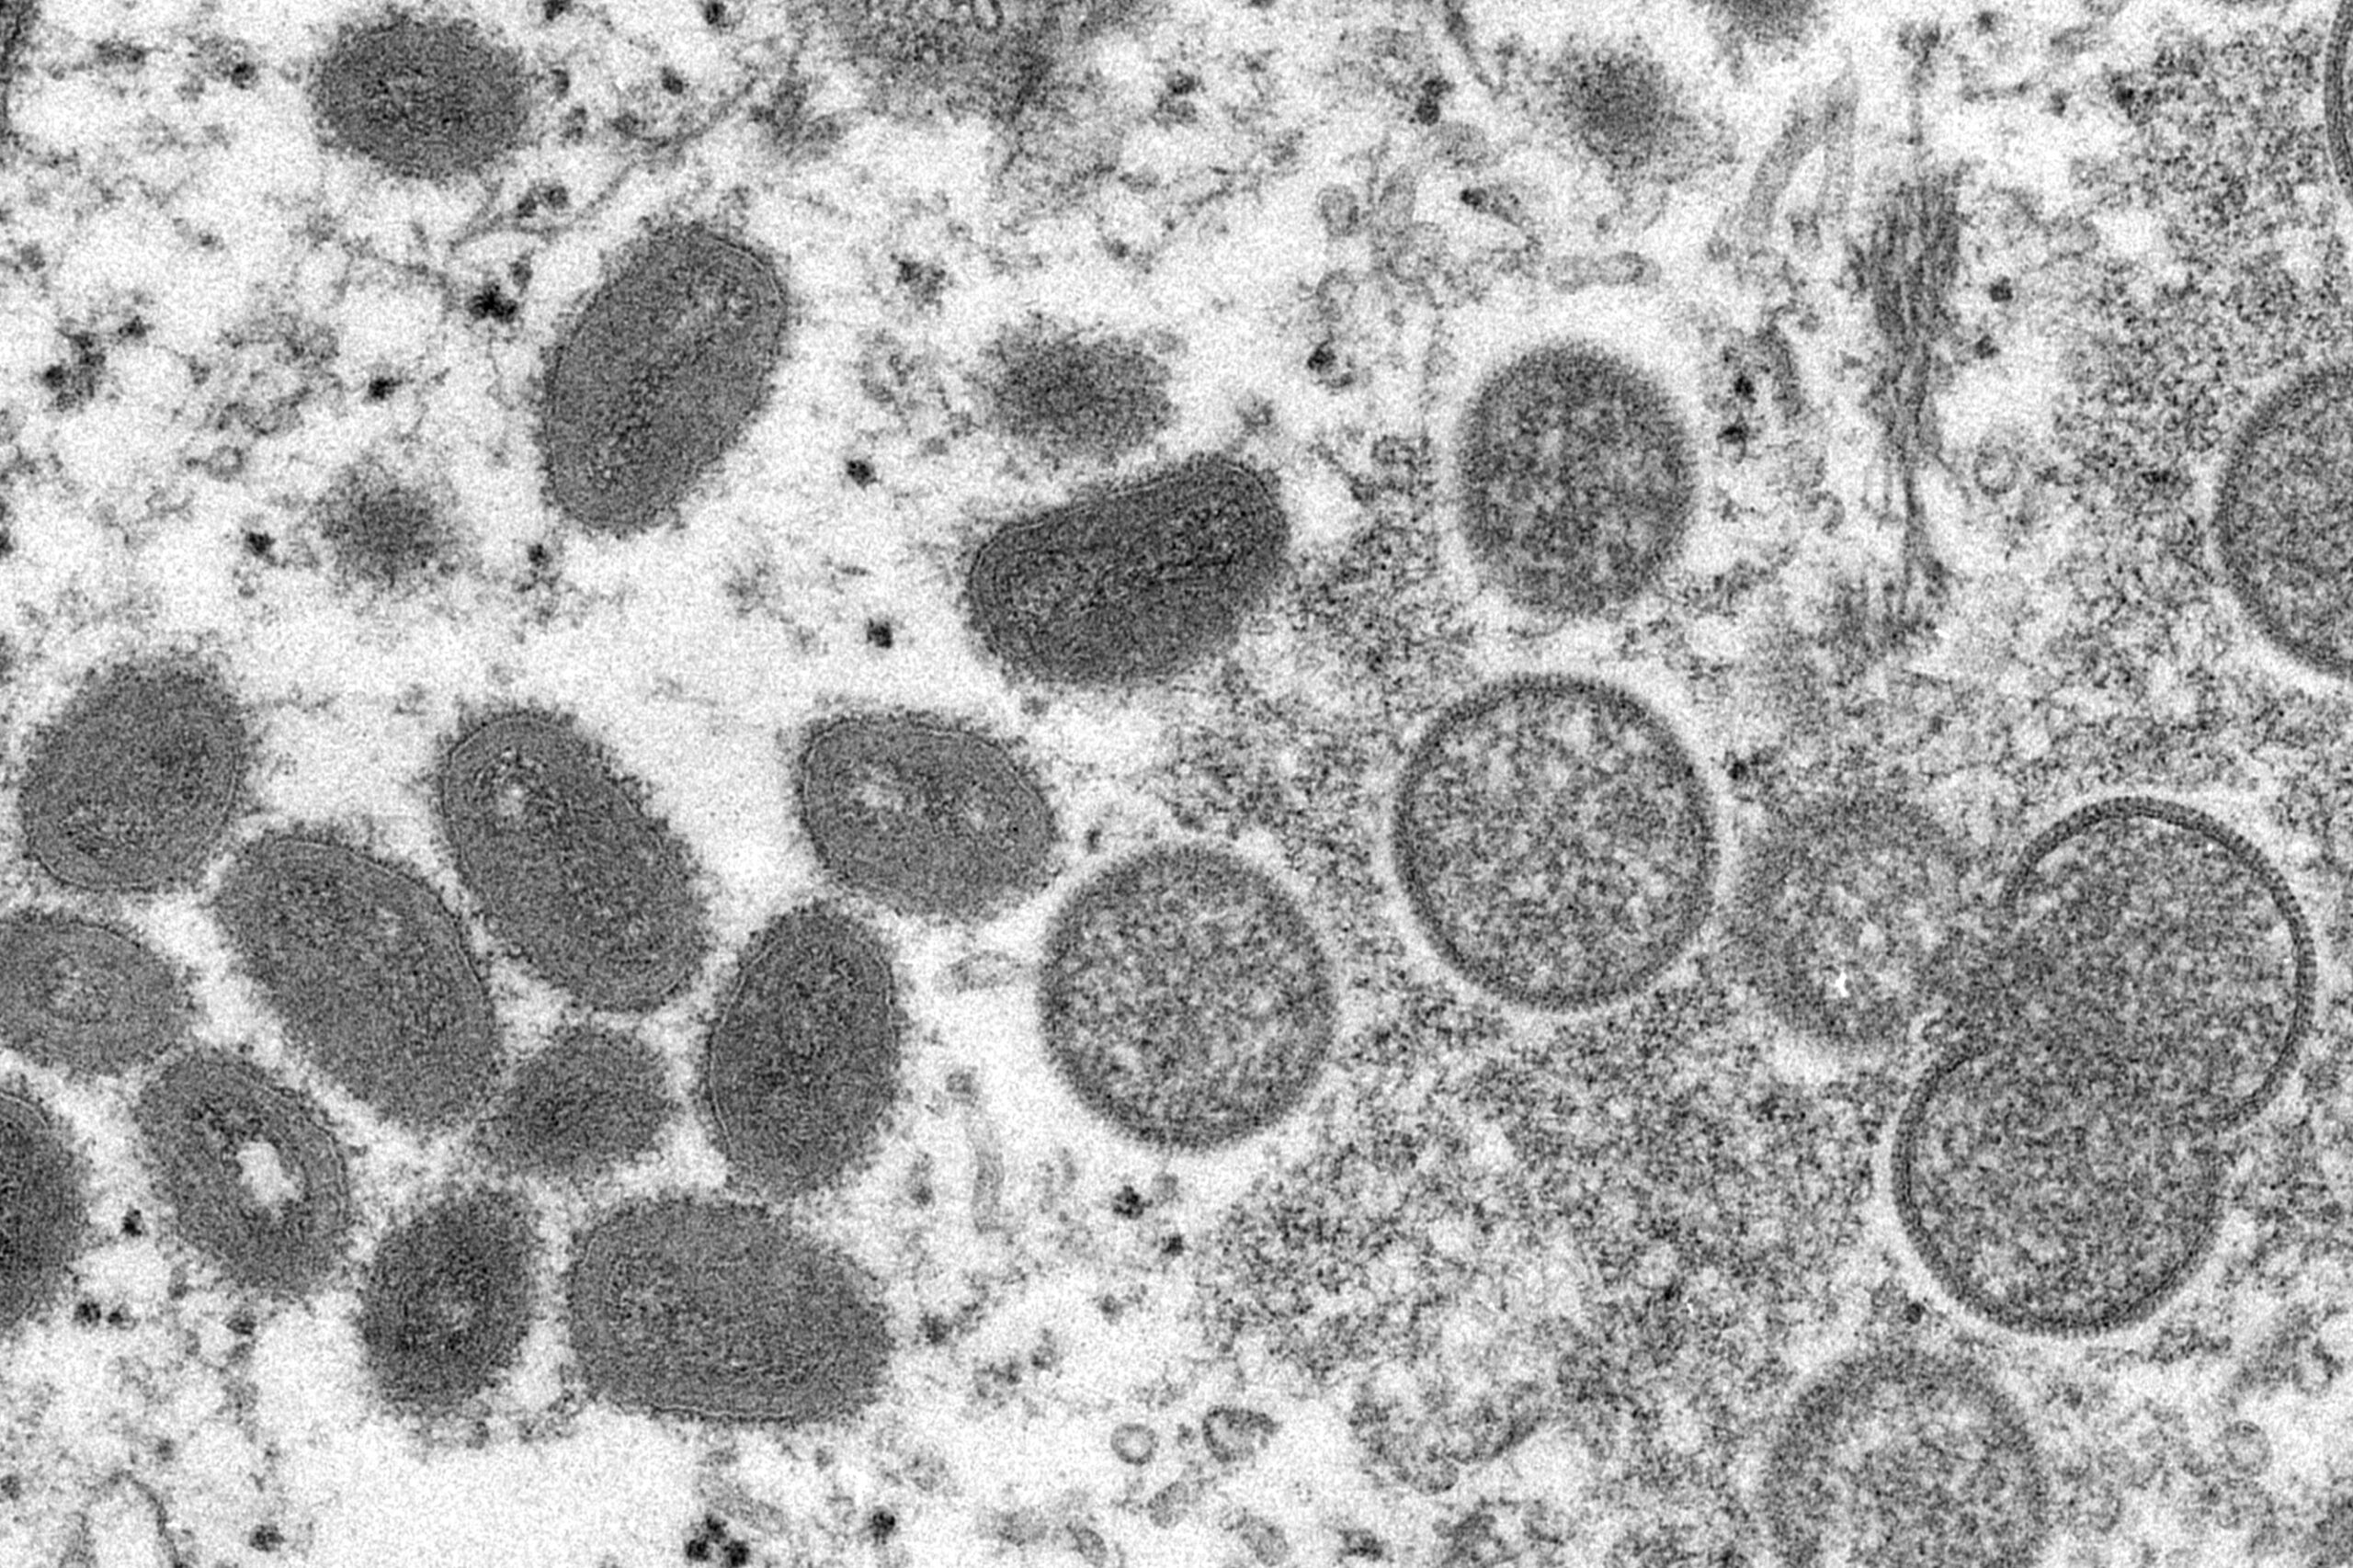 electron microscope image of monkeypox virions.